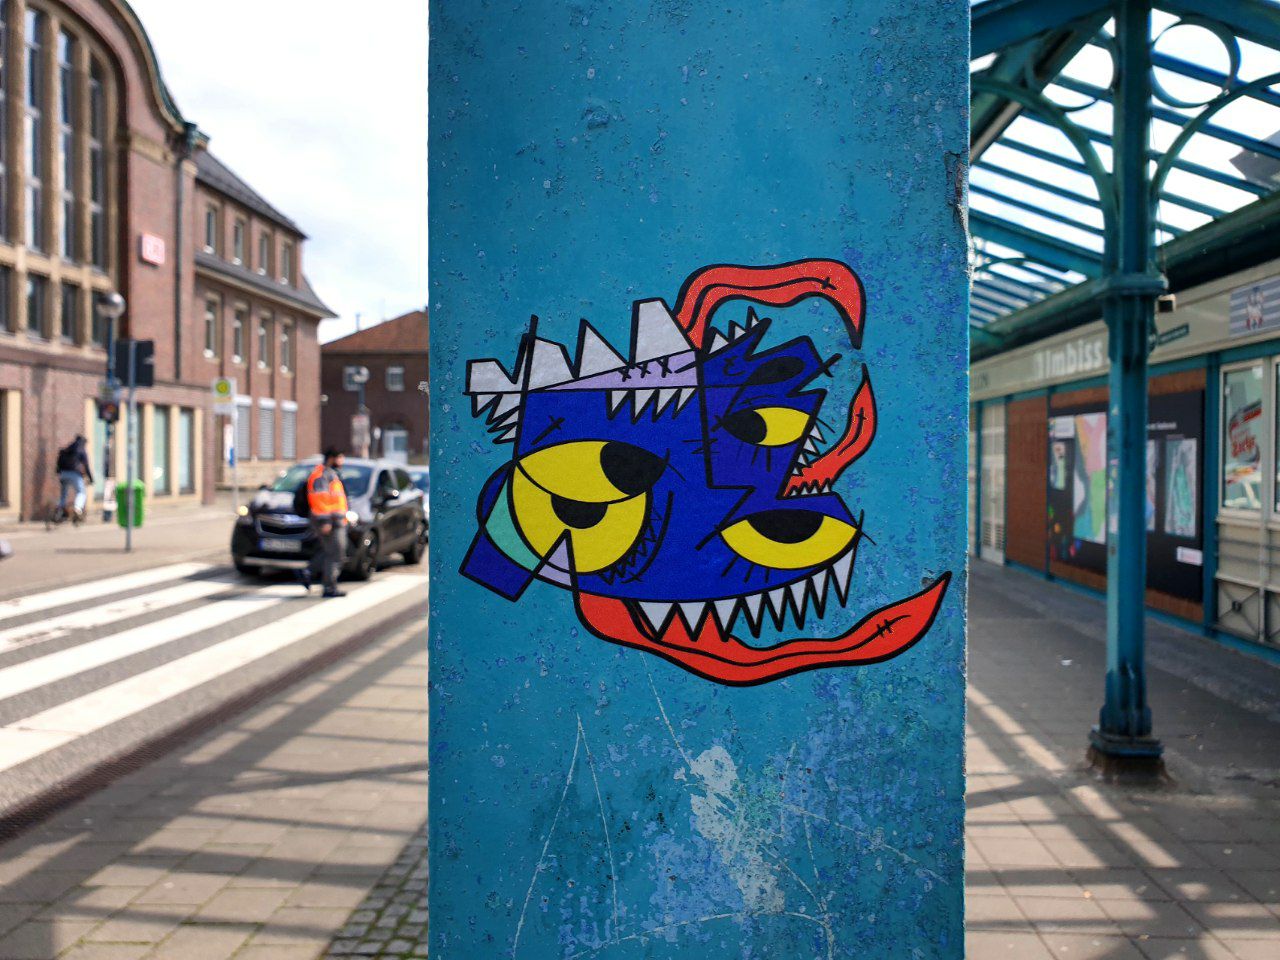 a blue pillar with graffiti on it